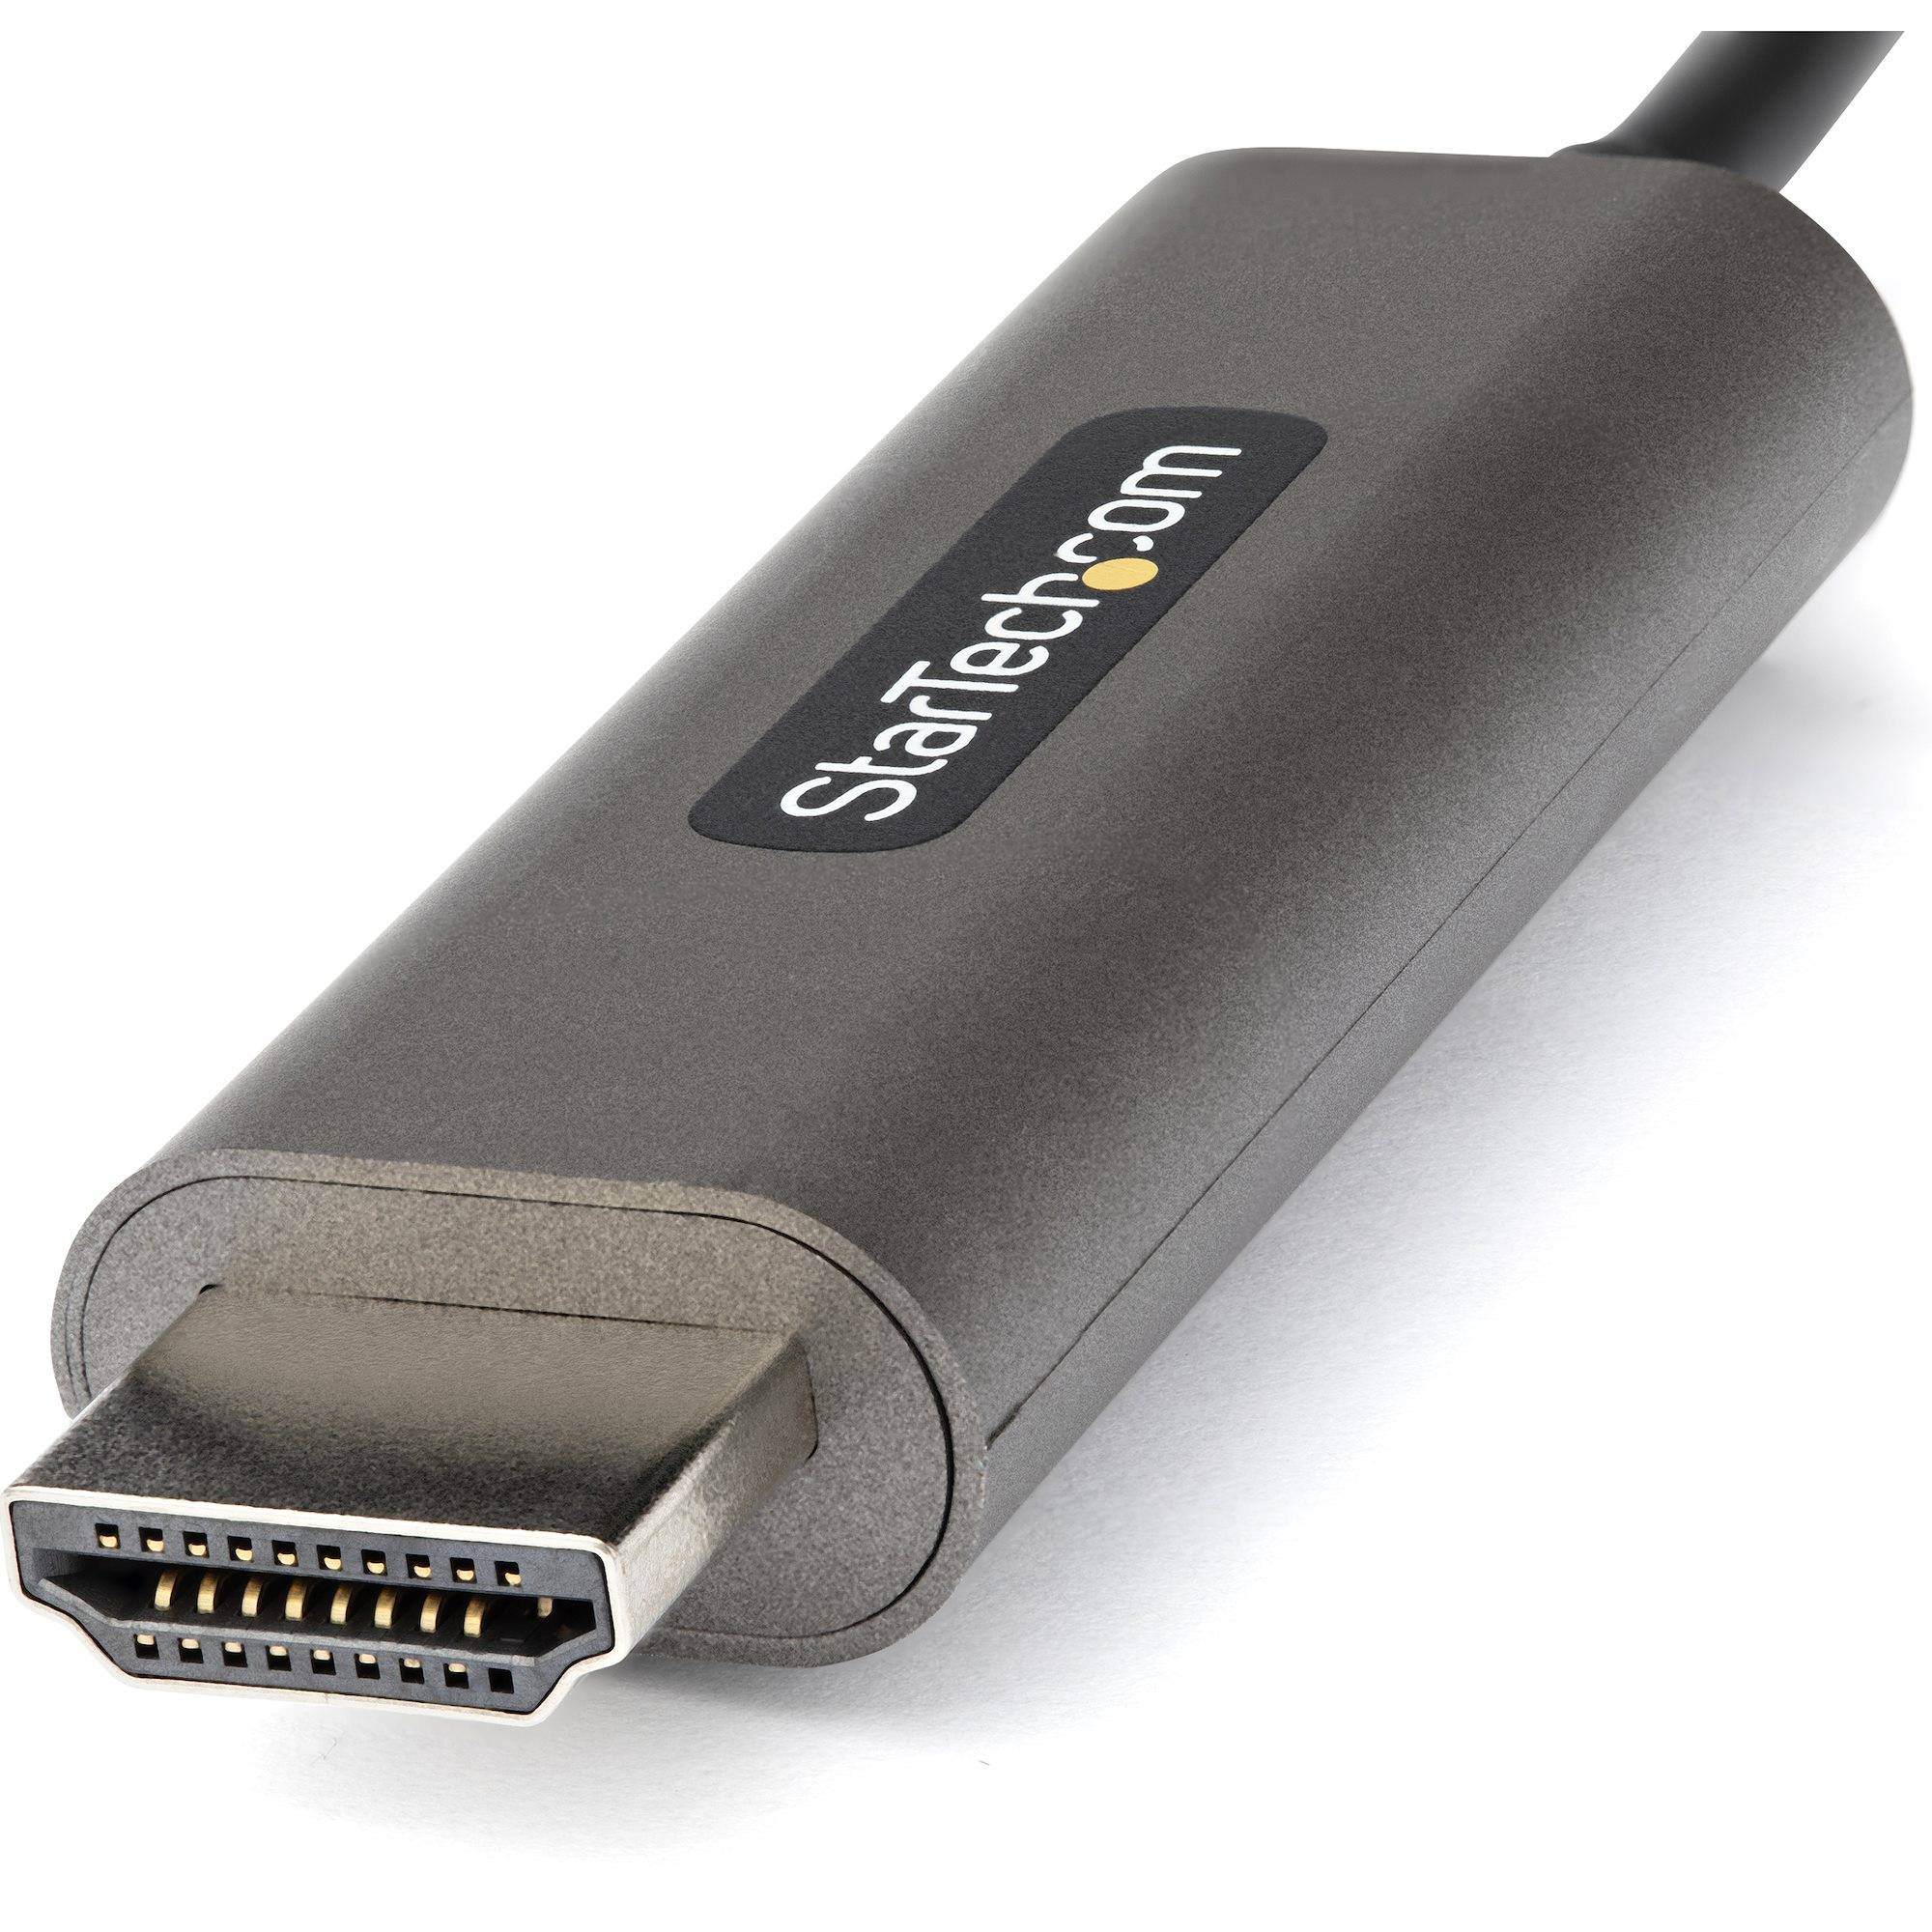 Rca Informatique - image du produit : 16FT USB C TO HDMI CABLE 4K 60 WITH HDR10 - USB-C TO HDMI MONIT